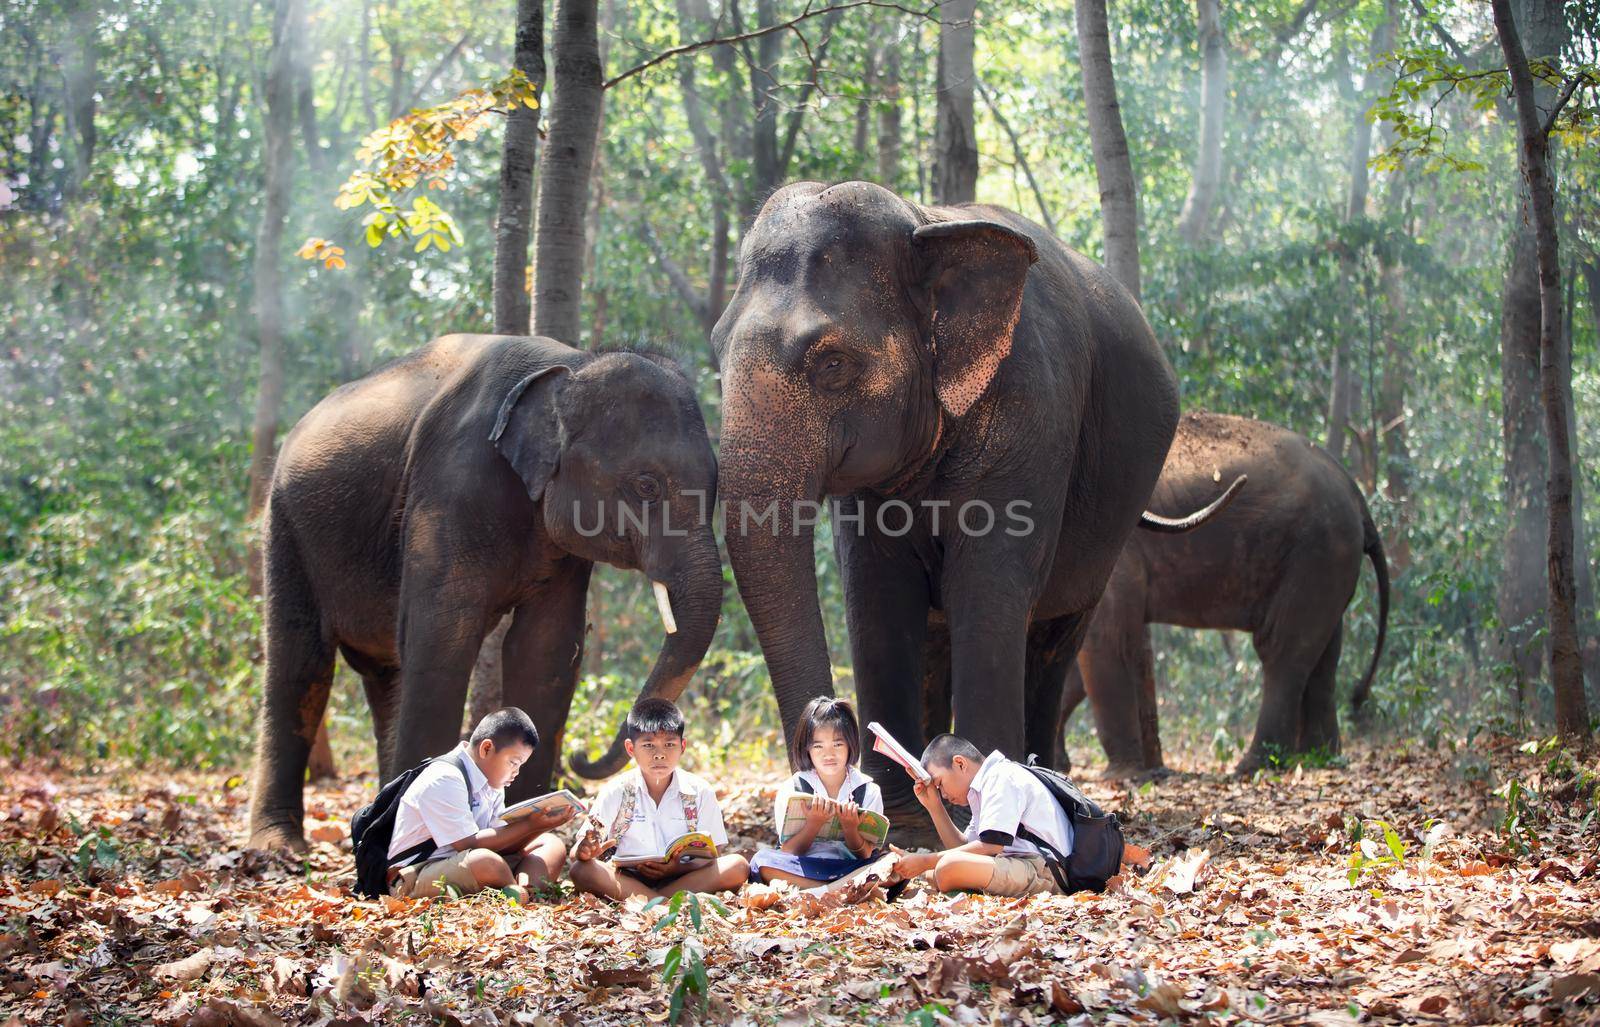 Students Walk To School Through Forest Alongside Elephants by chuanchai